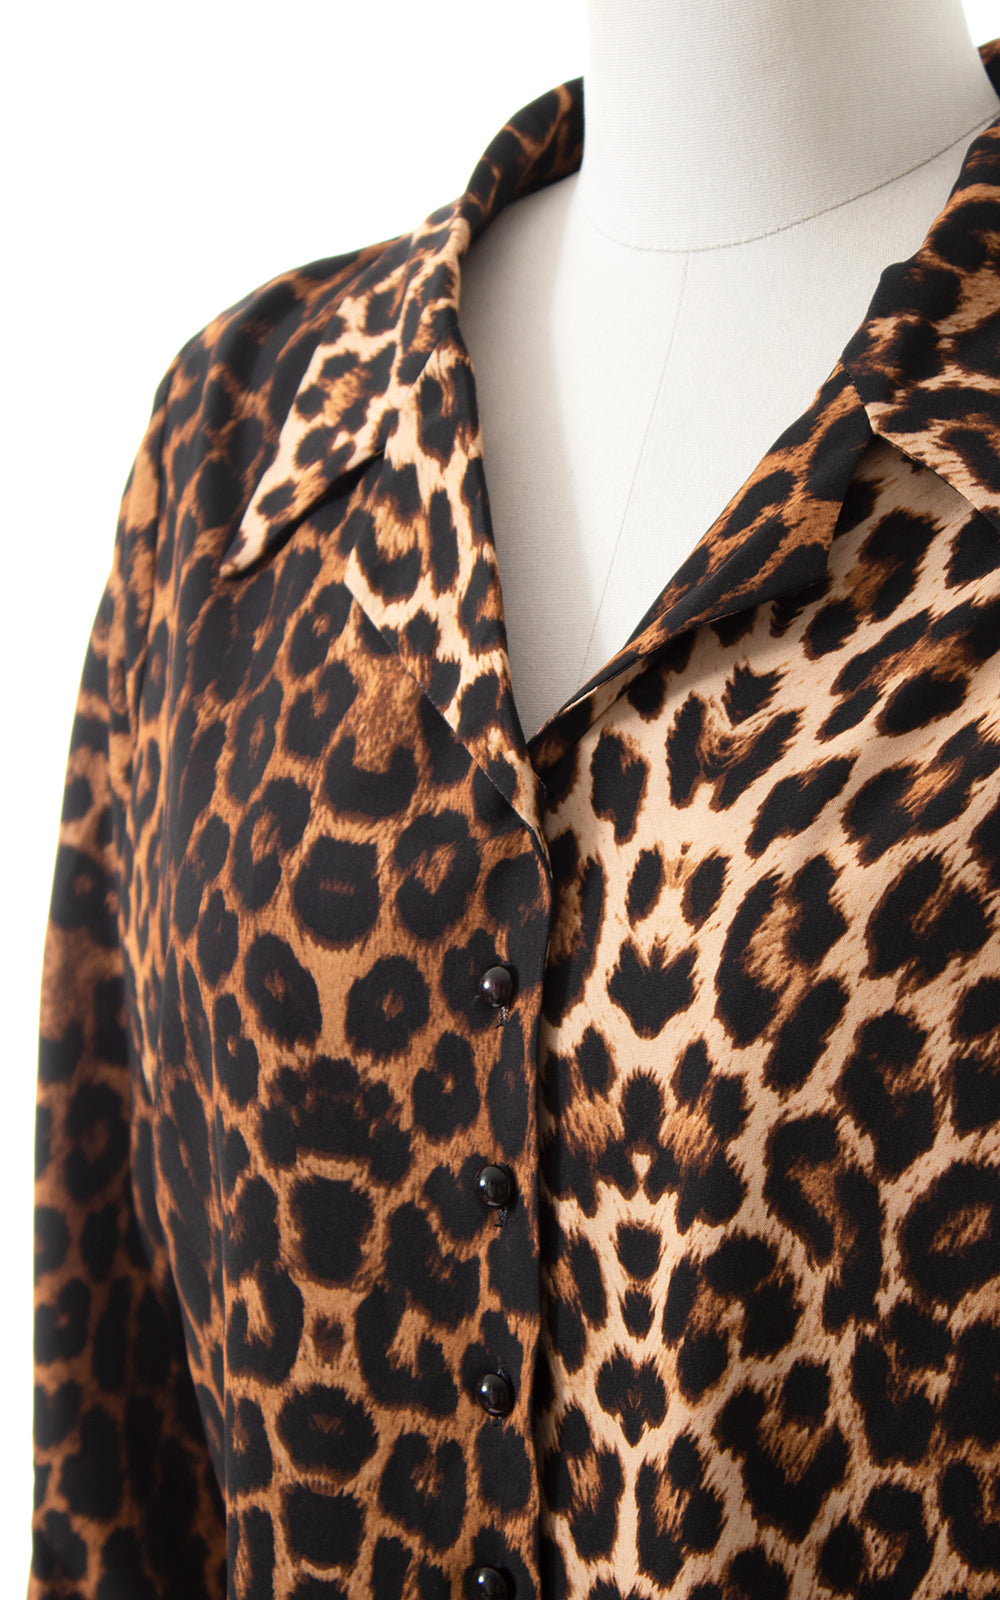 Modern 1950s Style Leopard Print Blouse | x-large